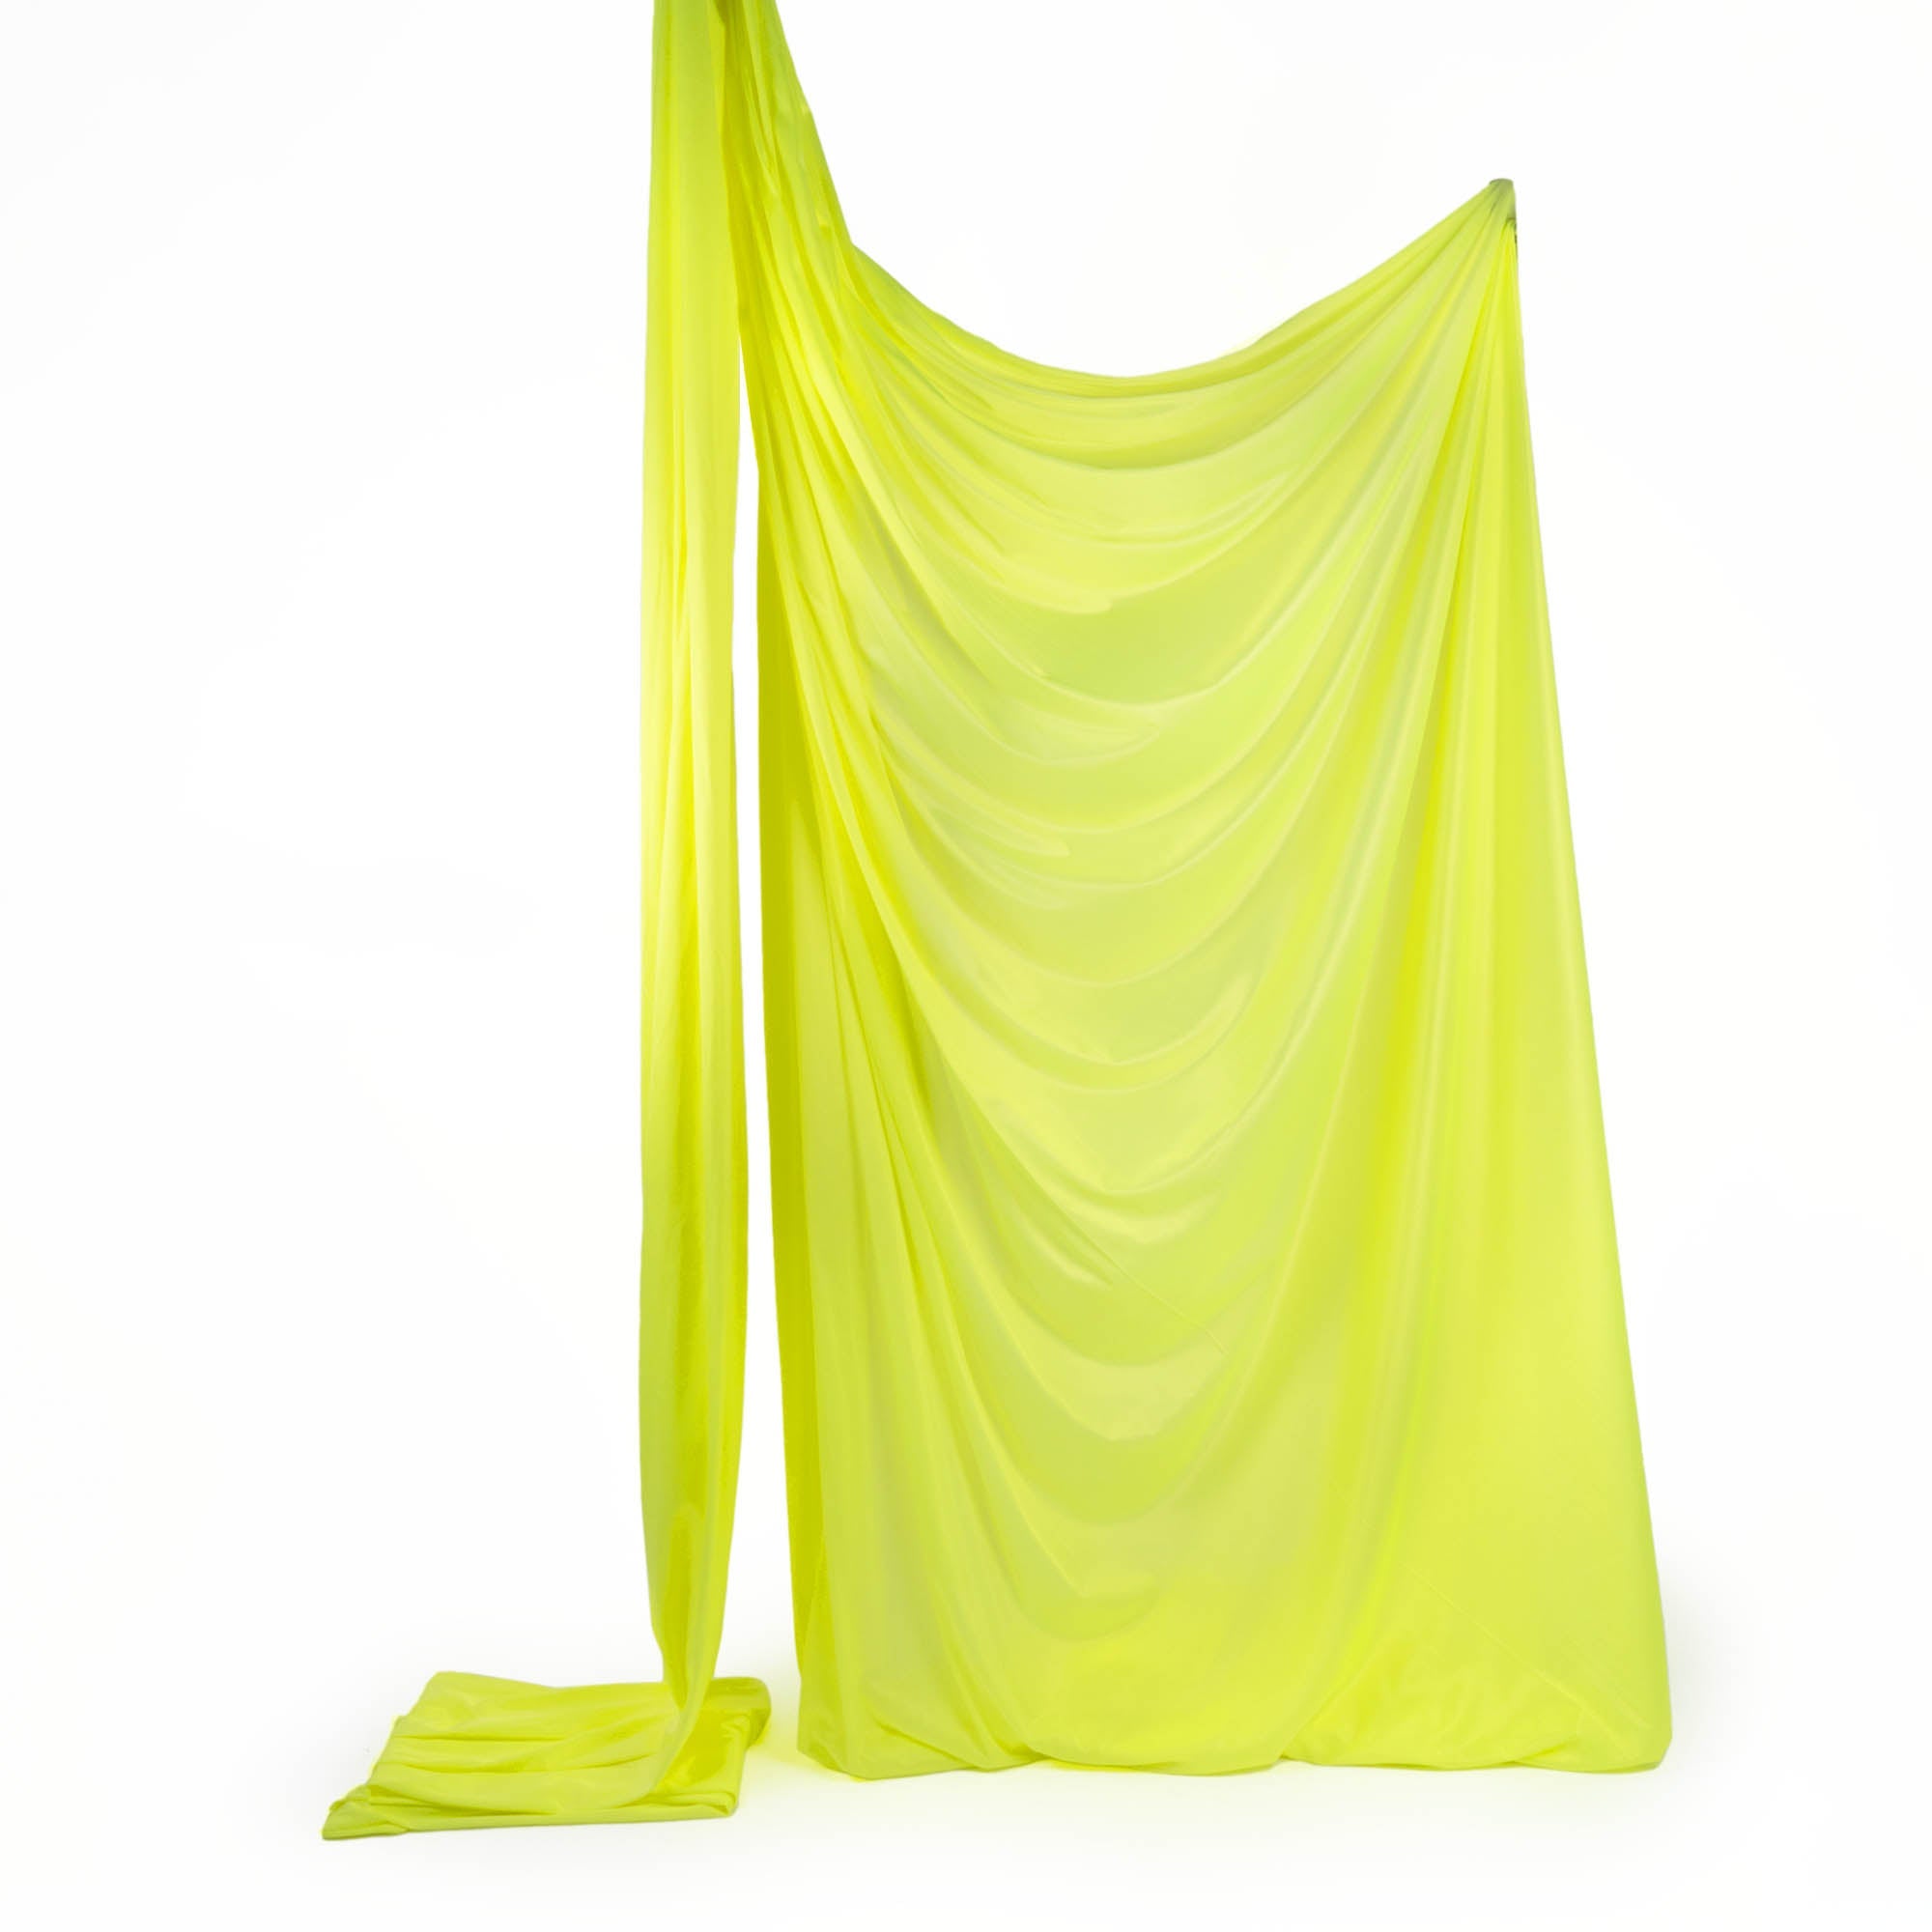 Neon yellow rigged silk